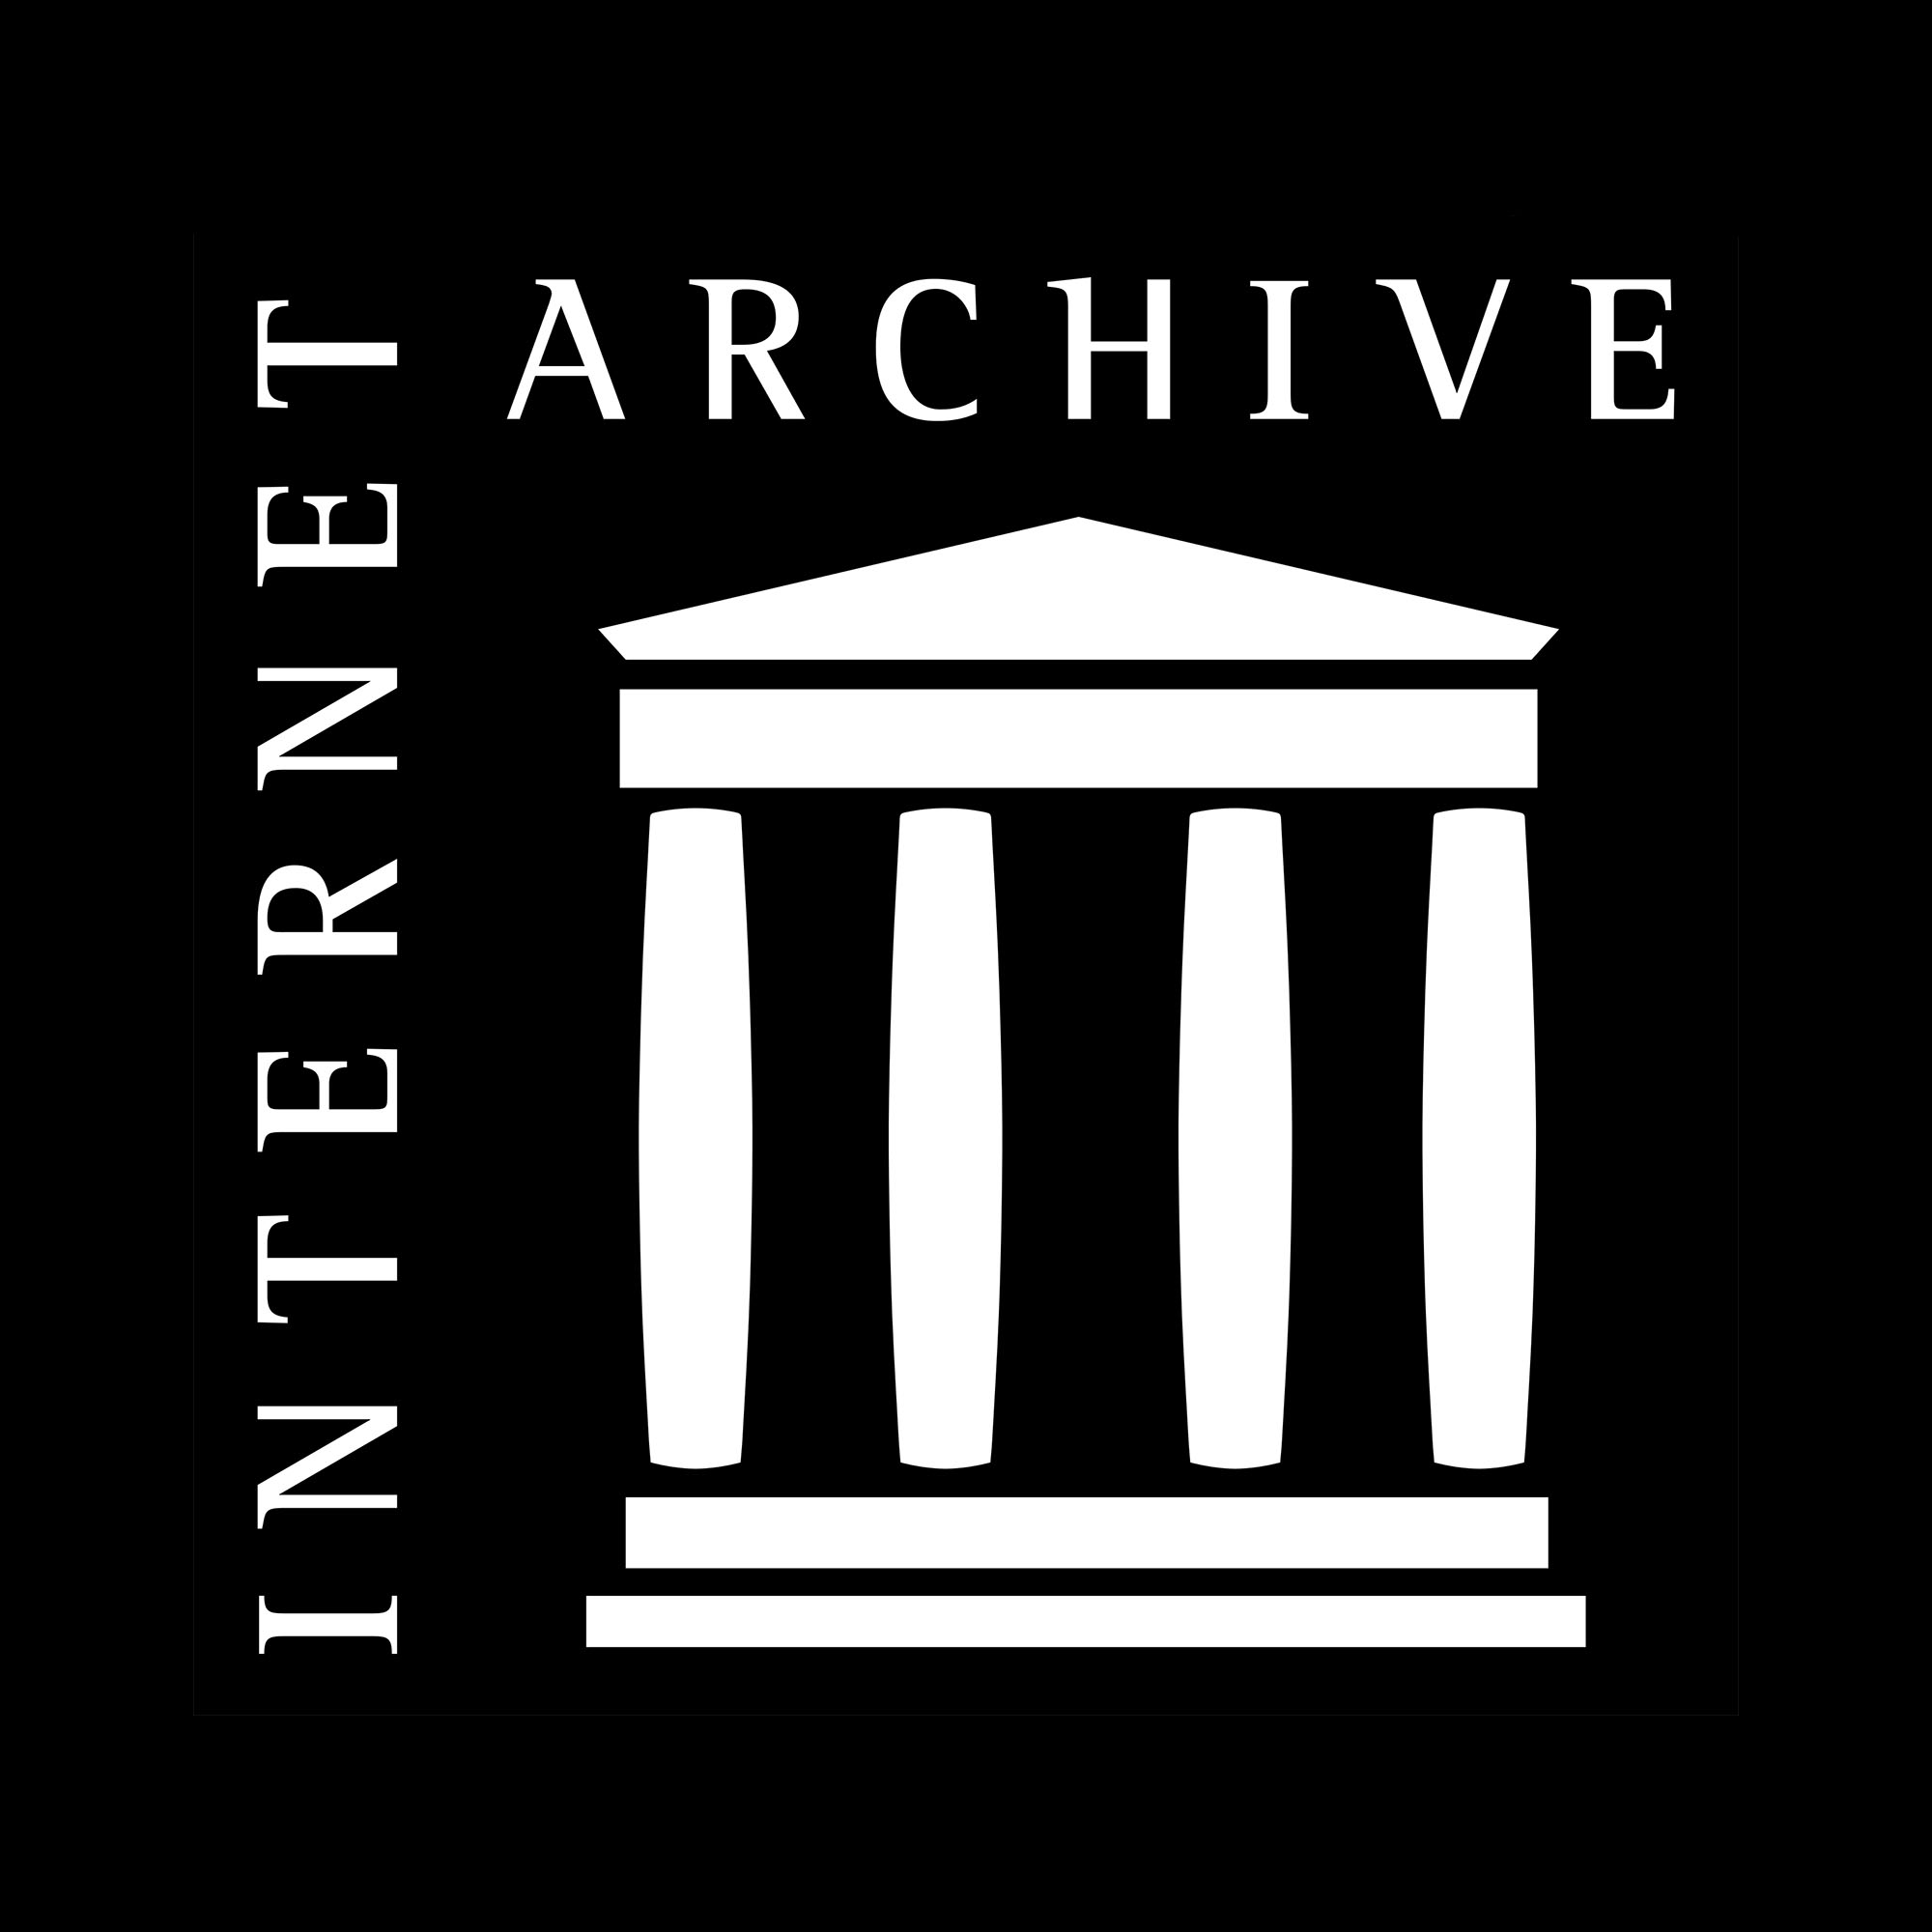 Archive org. Internet Archive. Internet Archive logo. Legalist. Web.Archive. Логотип.